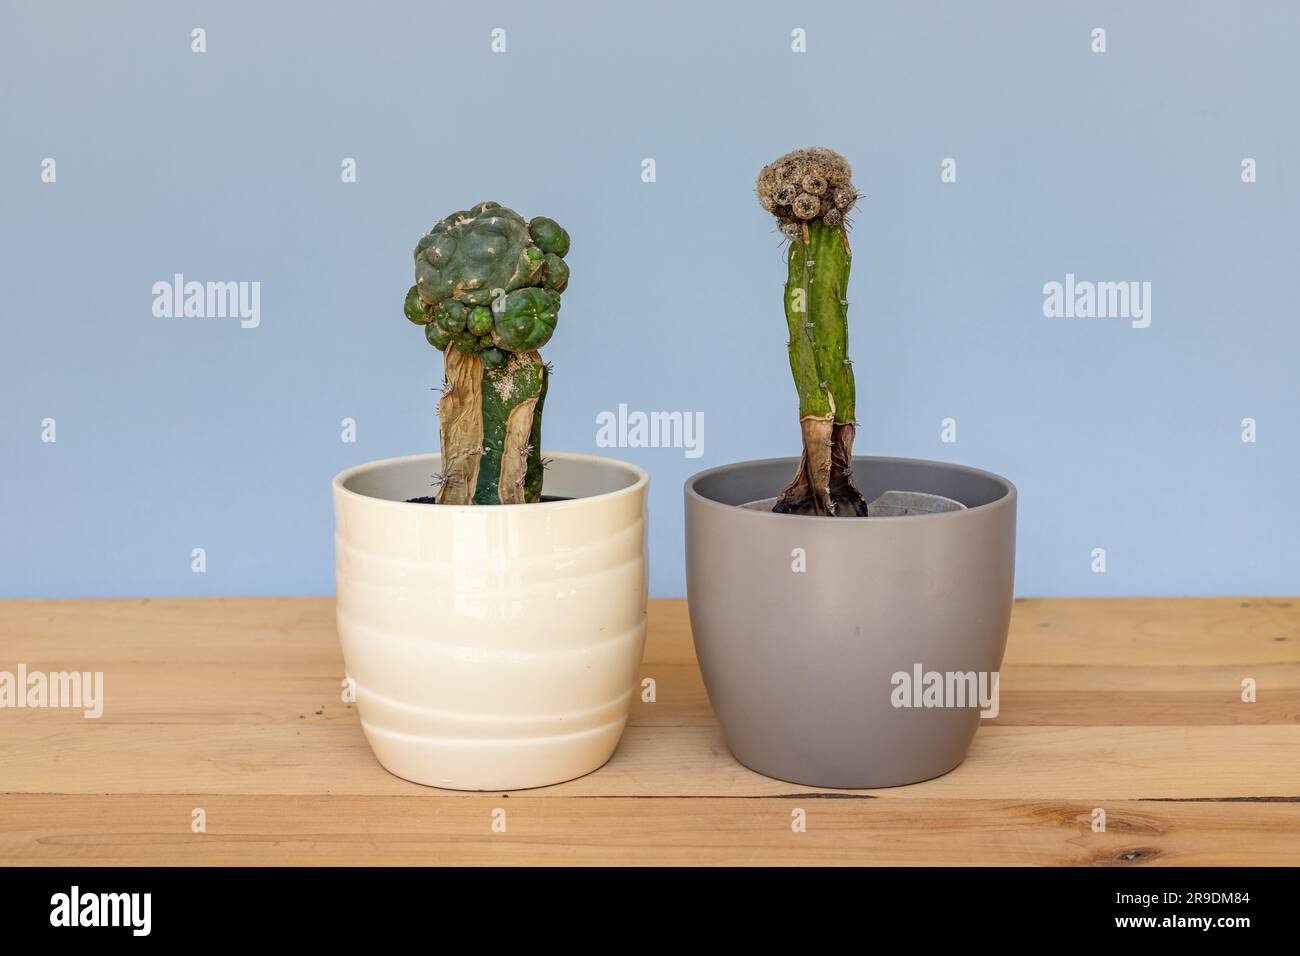 Dry cactus in ceramic pots closeup. Abandoned plants concept. Stock Photo